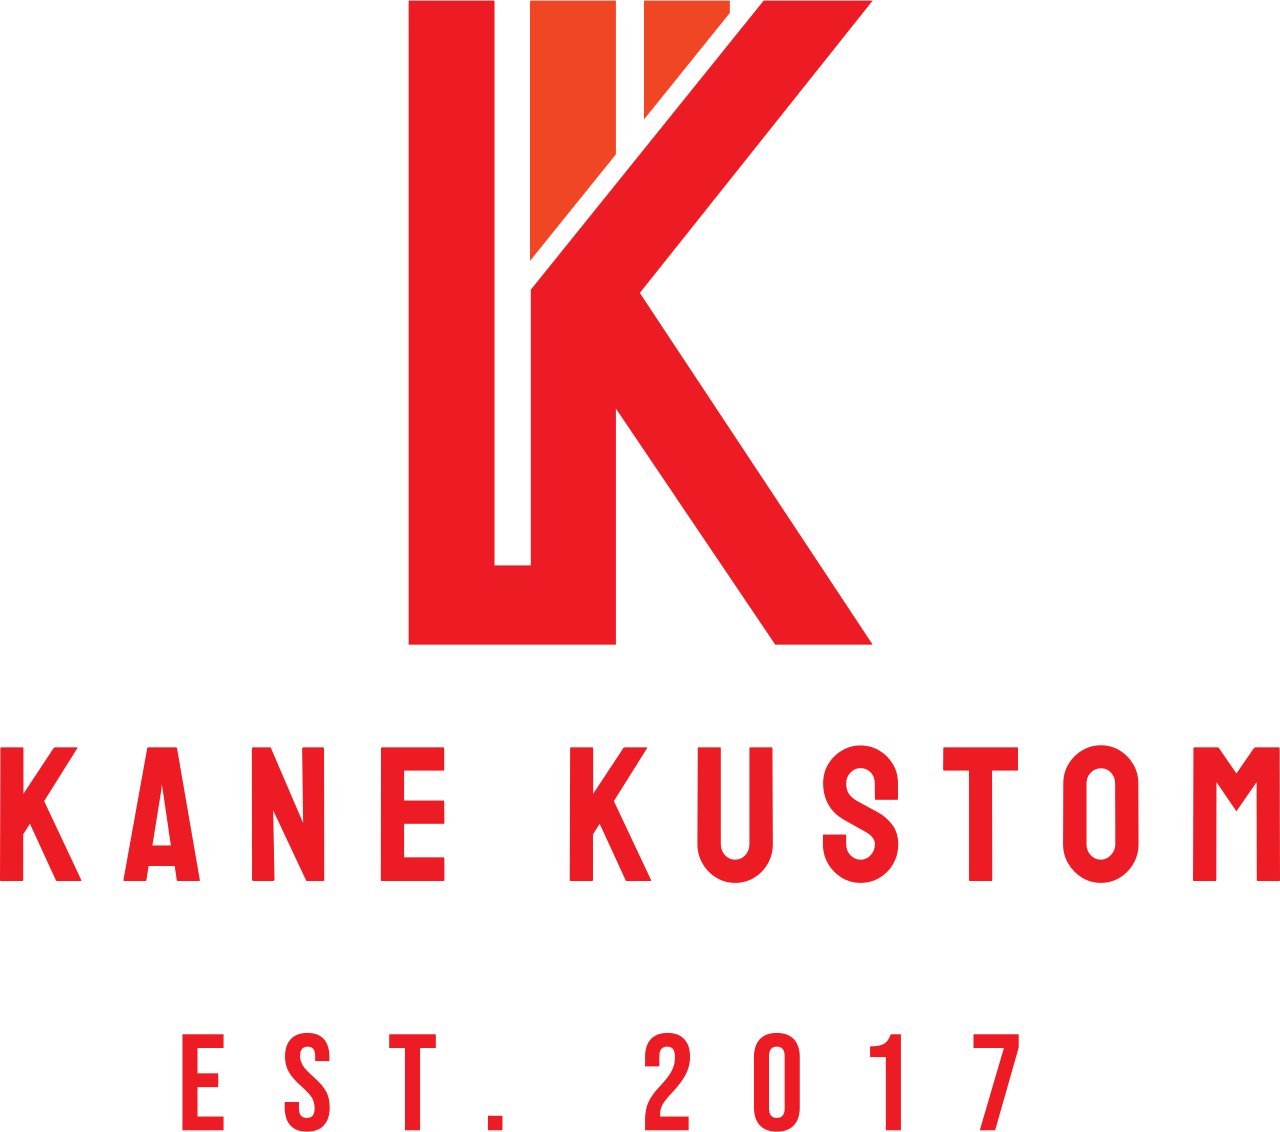 Kane kustom's logo